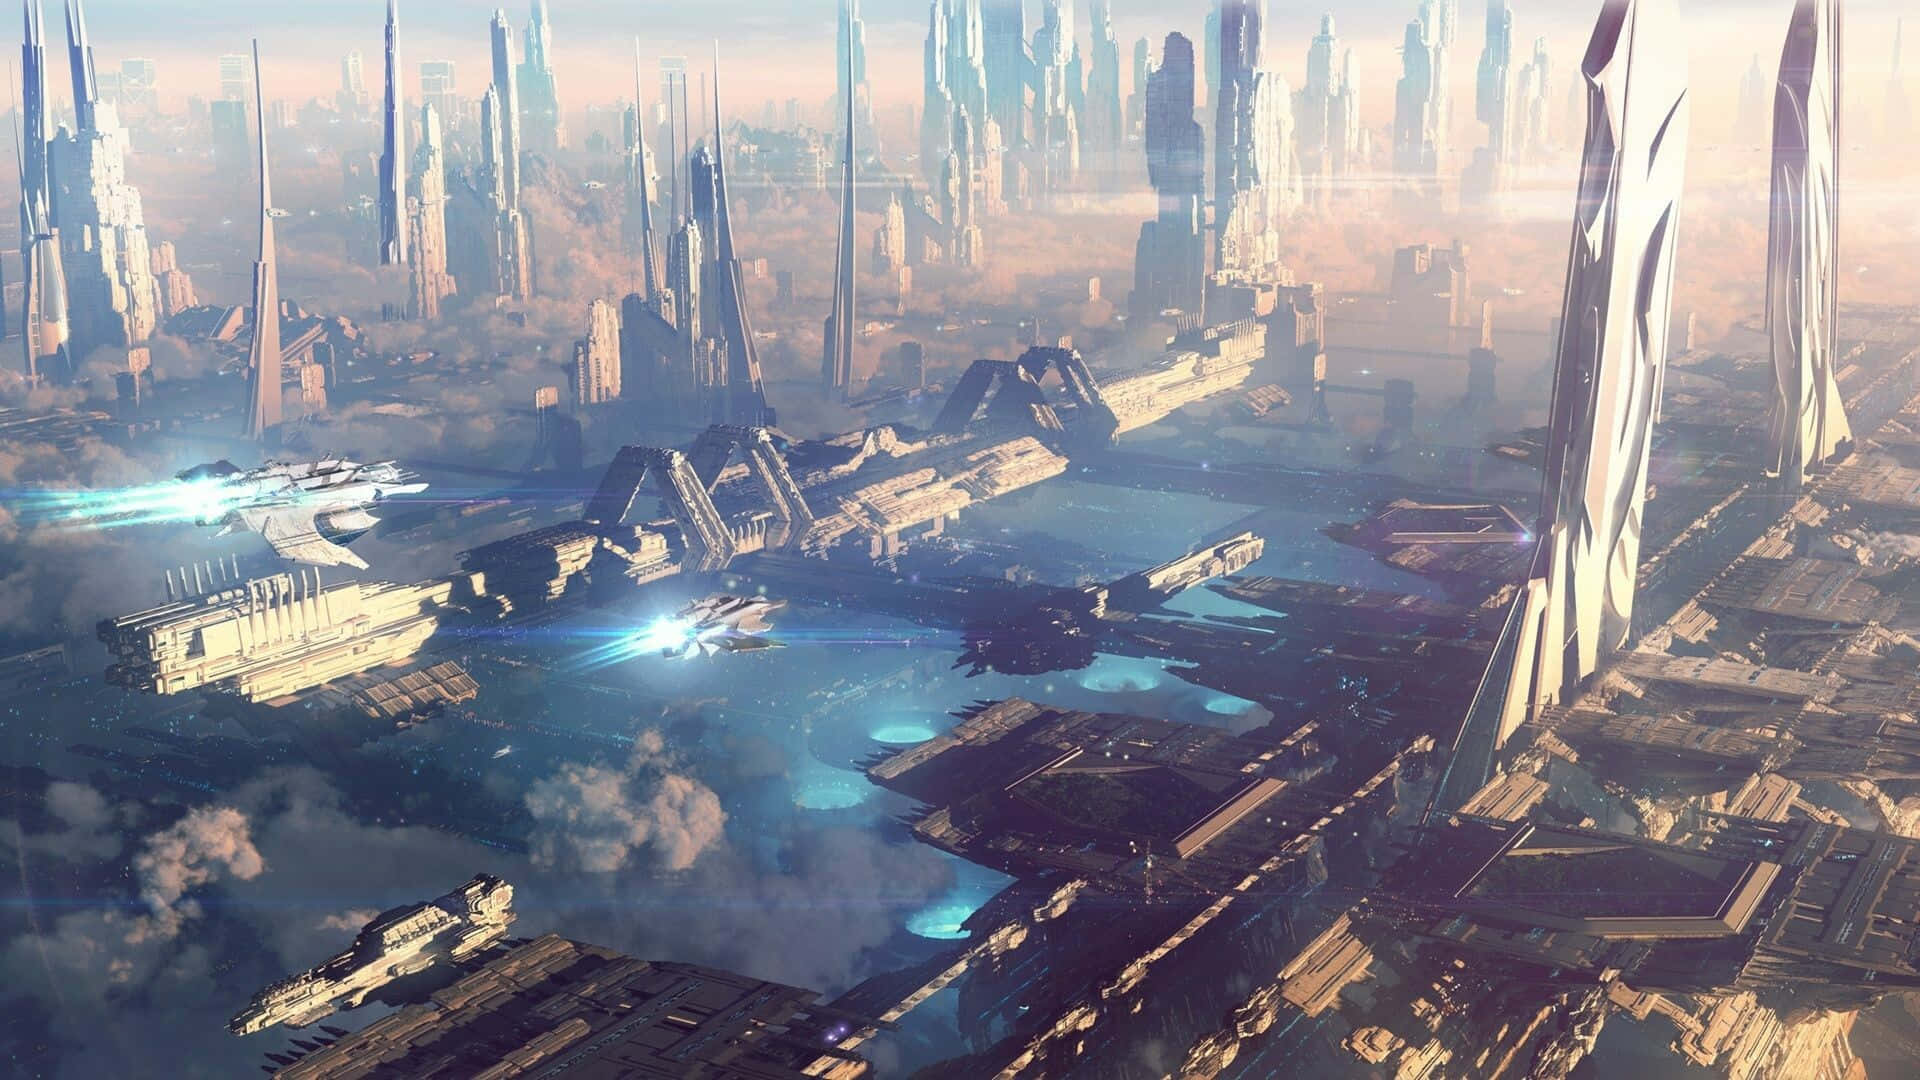 Marvel at the Futuristic City of Tomorrow Wallpaper